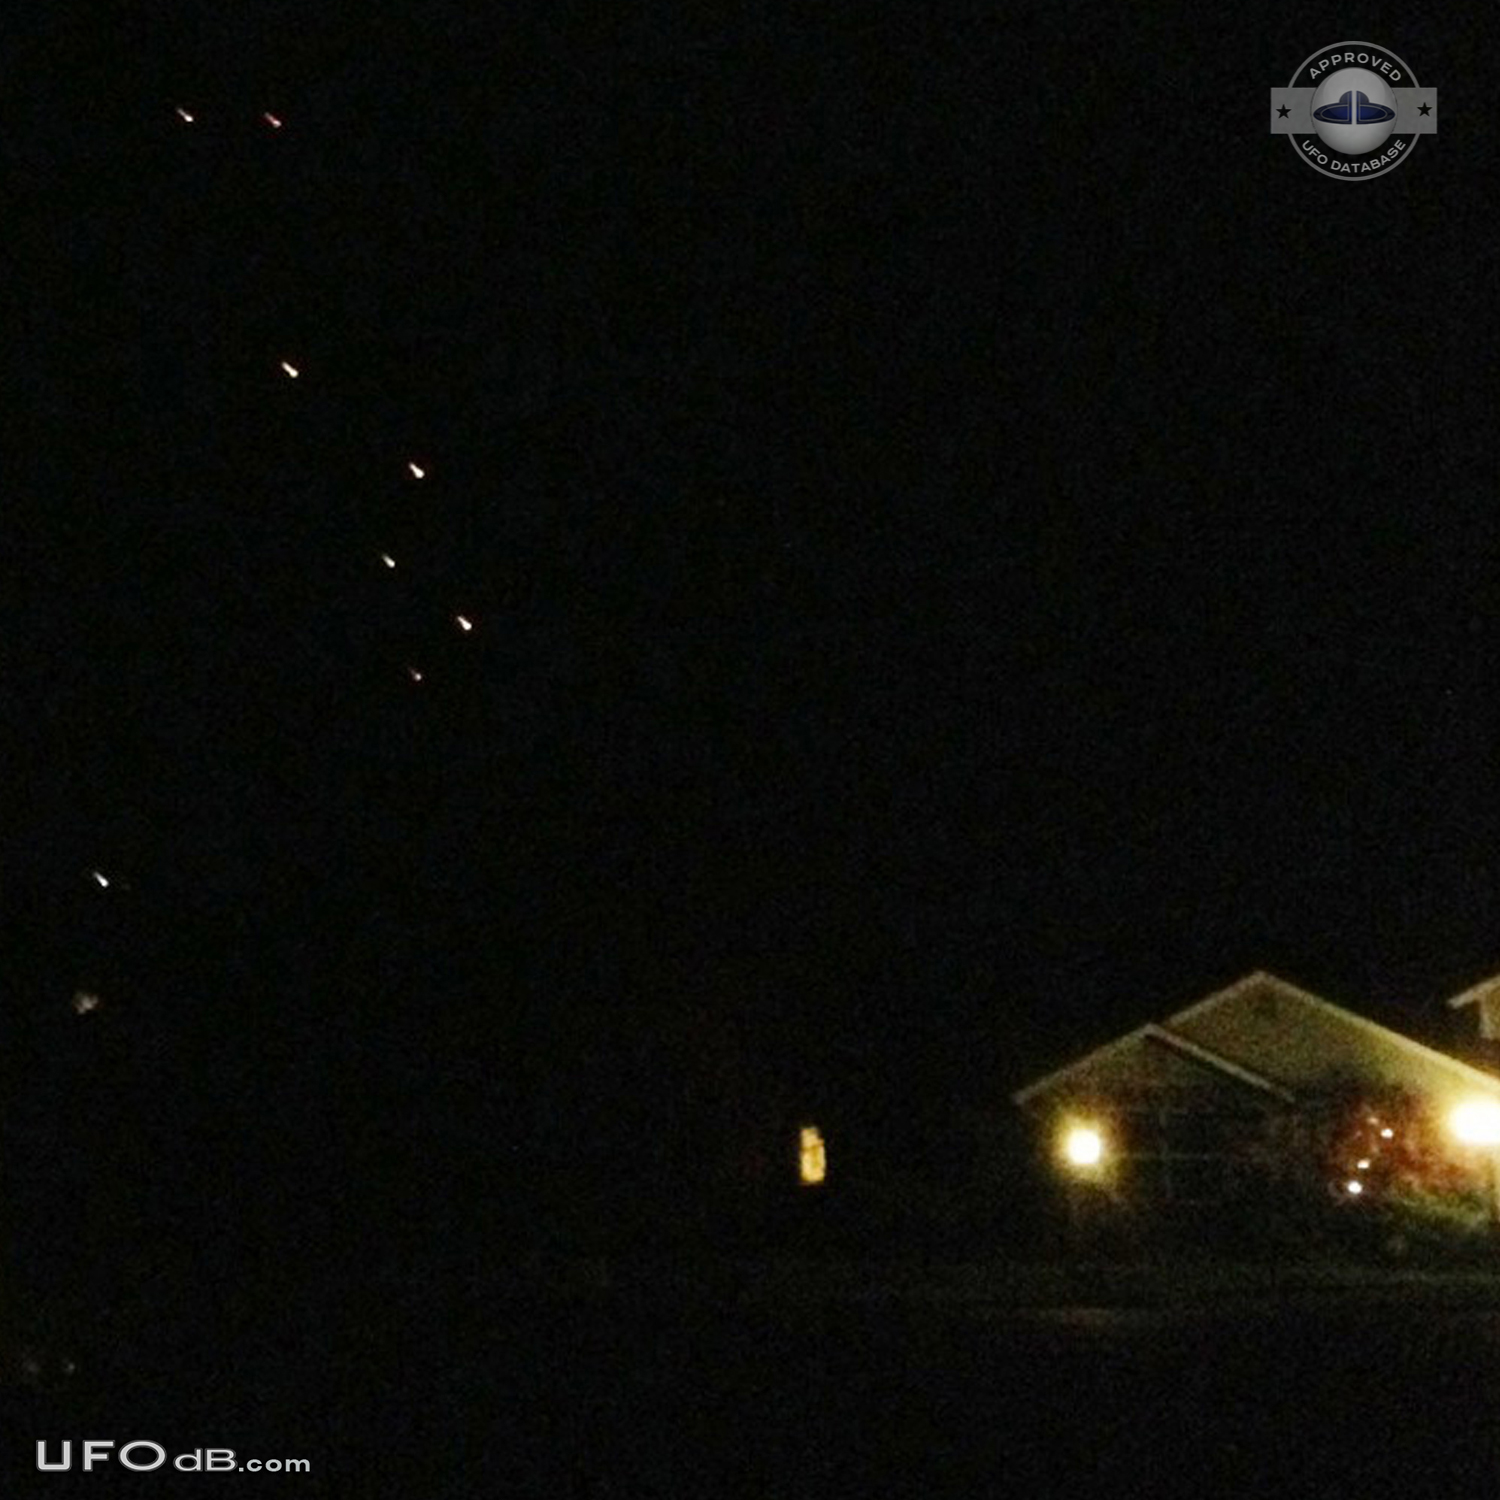 Fleet of orange orbs UFOs seen in the night sky of Oregon, USA in 2012 UFO Picture #539-1